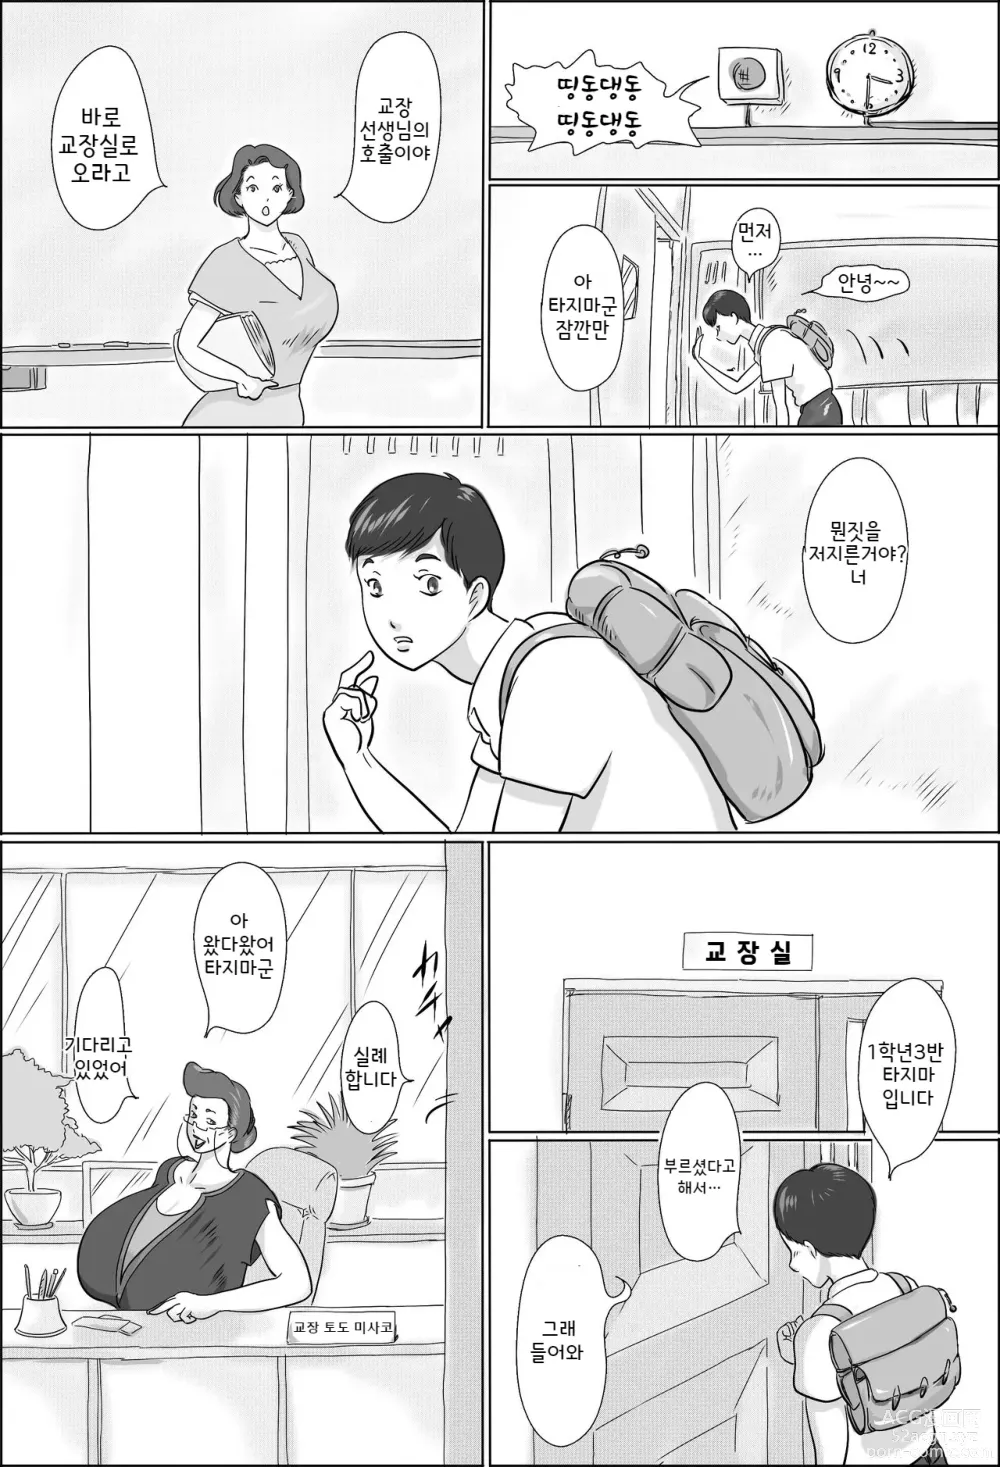 Page 3 of doujinshi 교장은 학교에서 학생을 낚는다